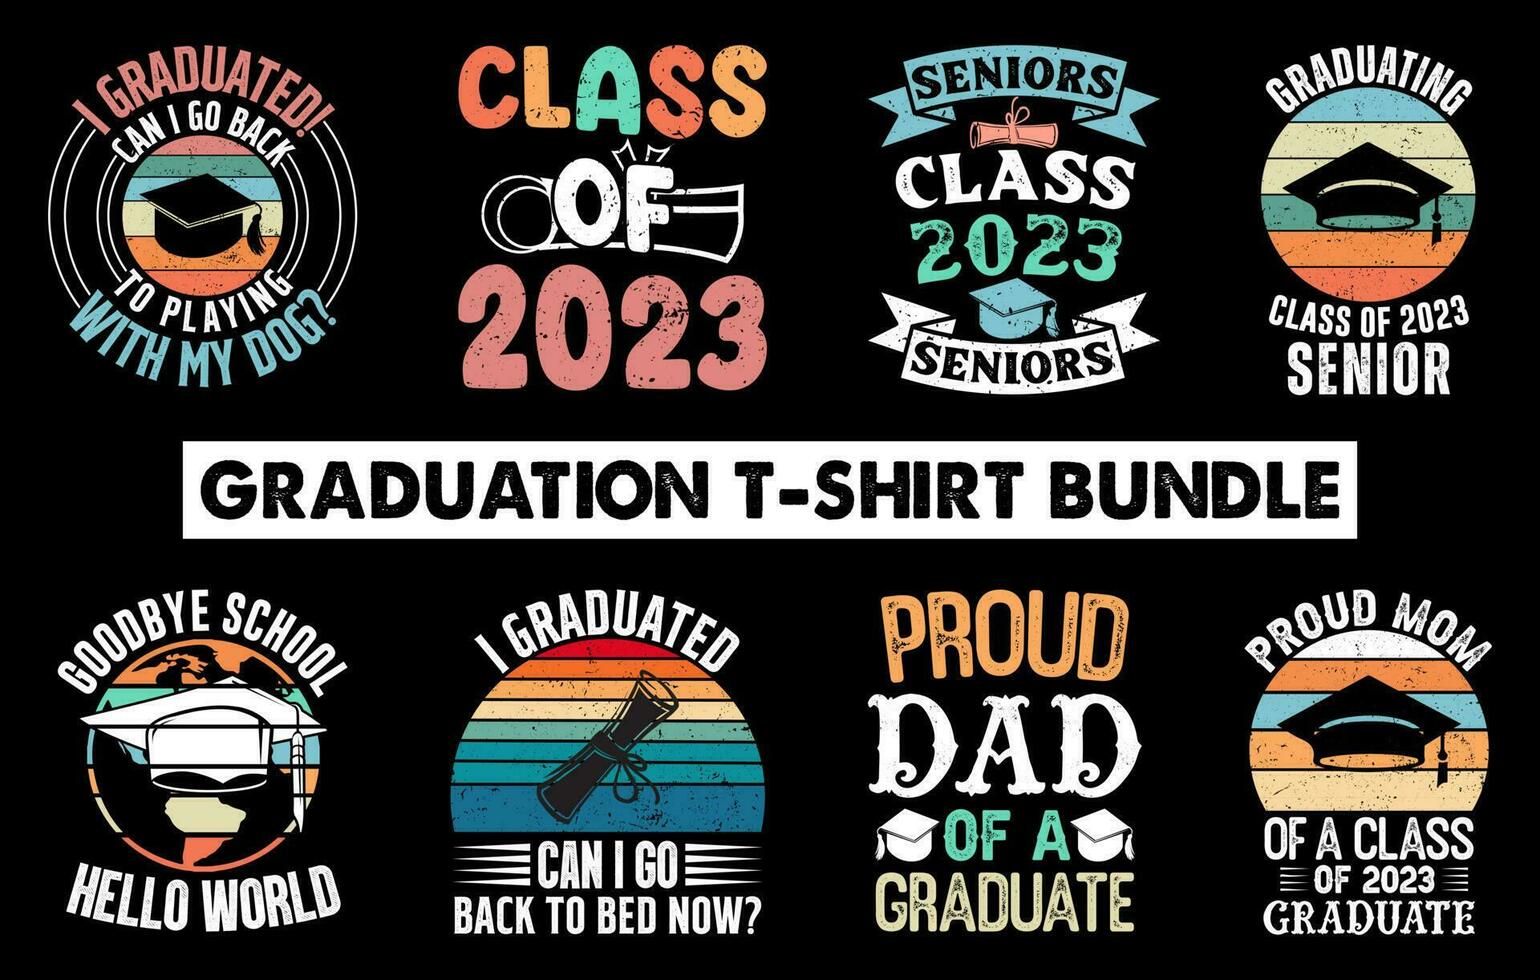 Graduation t shirt design Bundle, Congratulations Graduates Class of 2023, vintage t shirt set vector